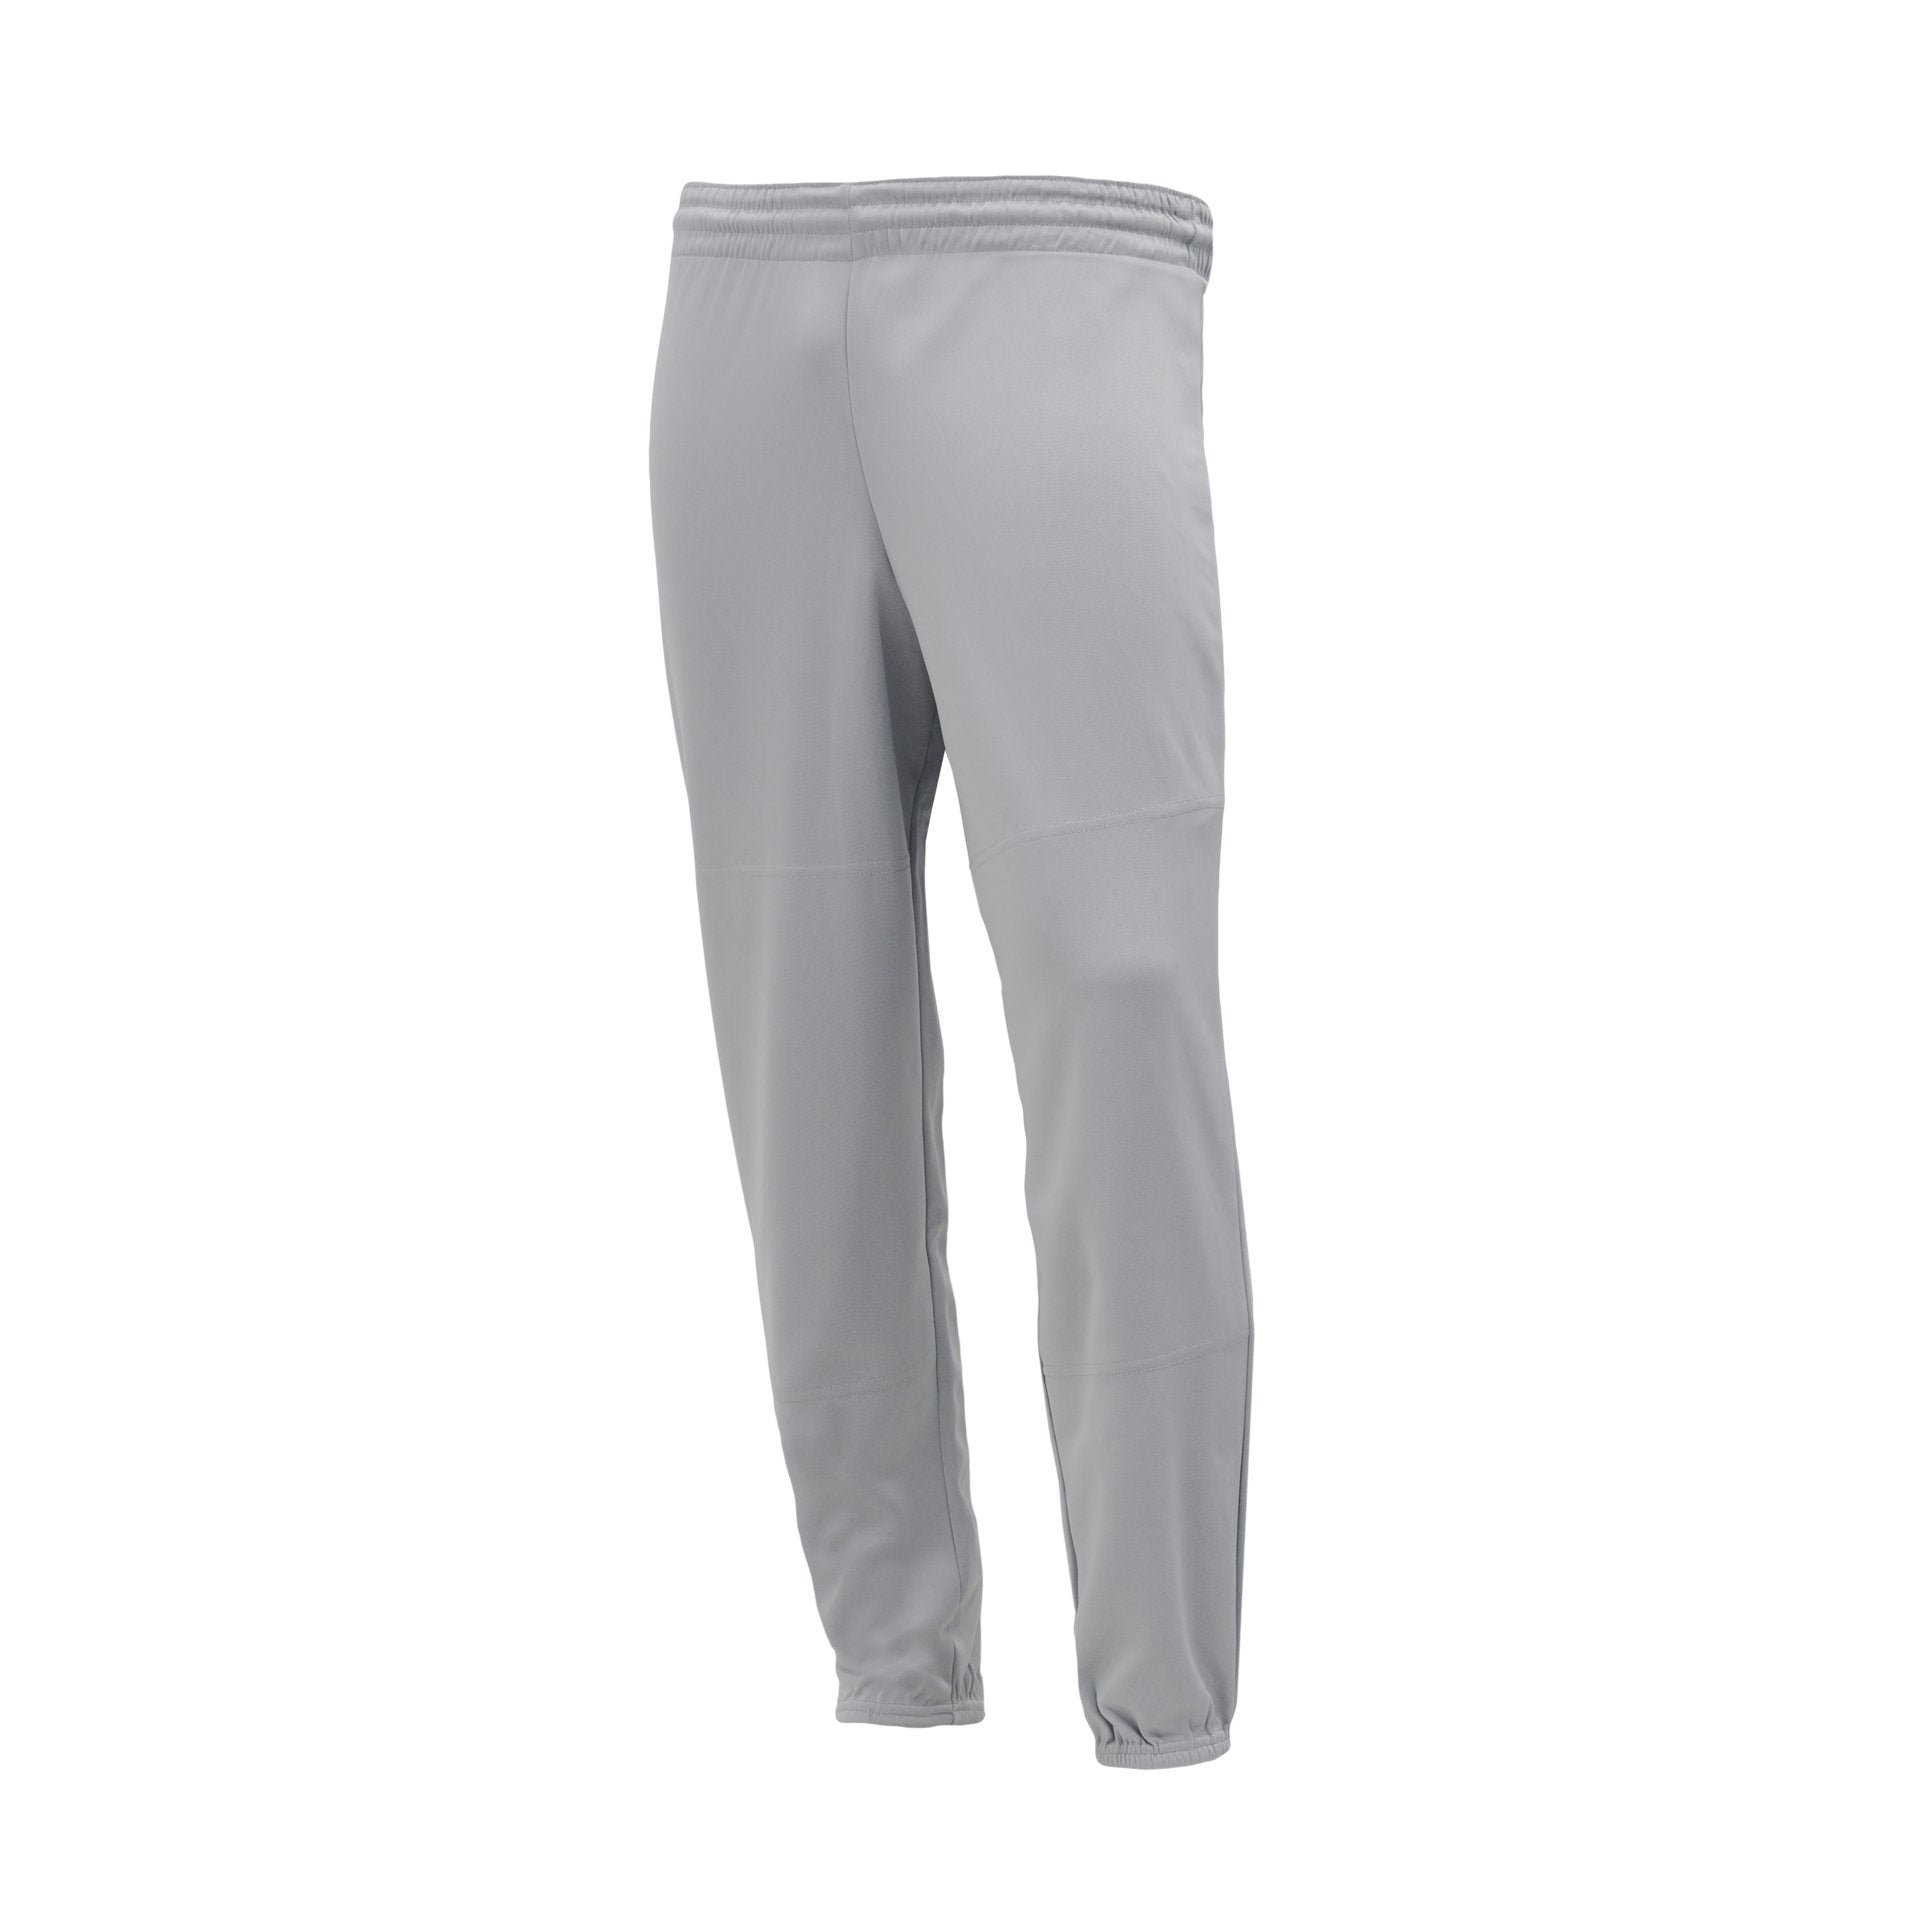 Premium Baseball Pants, Drawstring, Elastic Bottom, Grey, ba1371-012